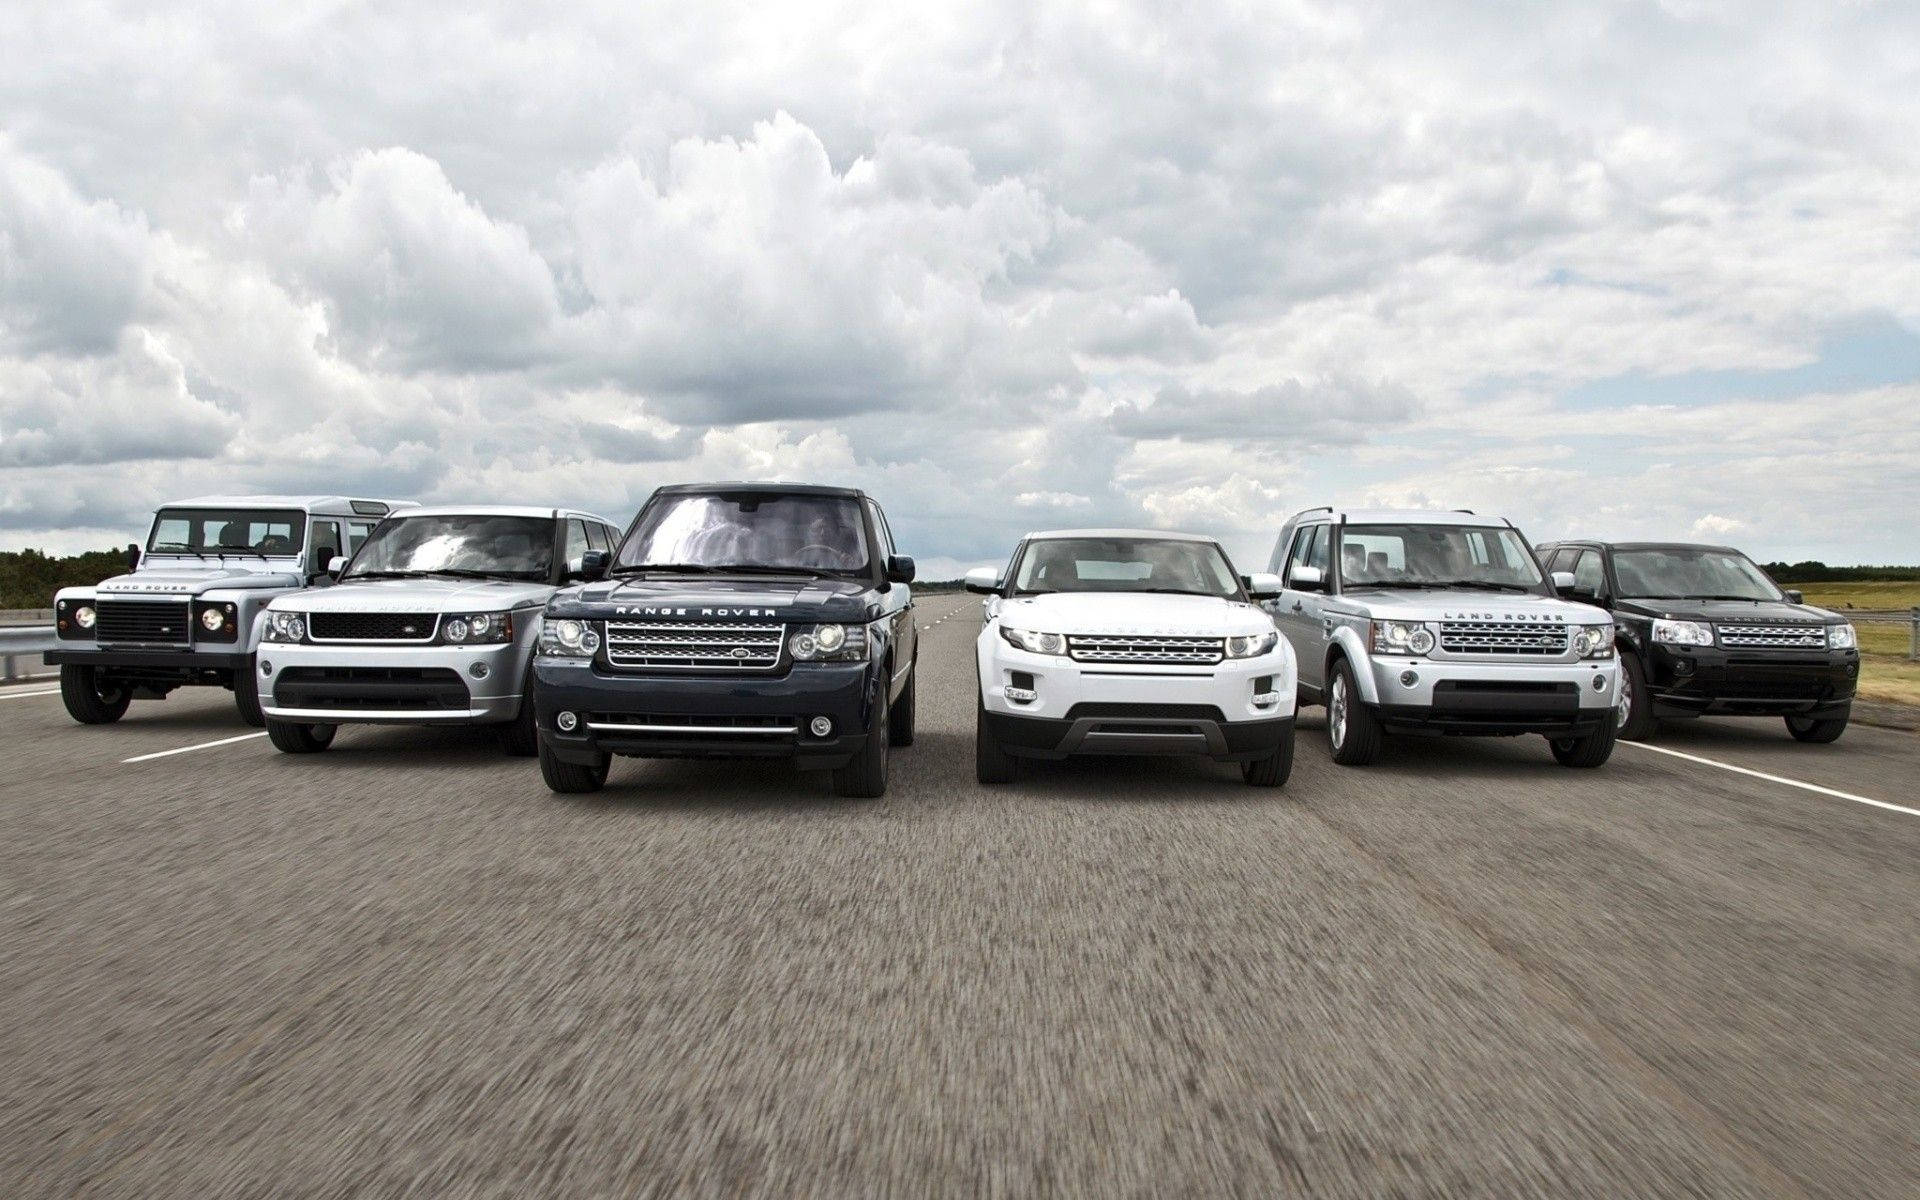 An exclusive fleet of Land Rover vehicles Wallpaper